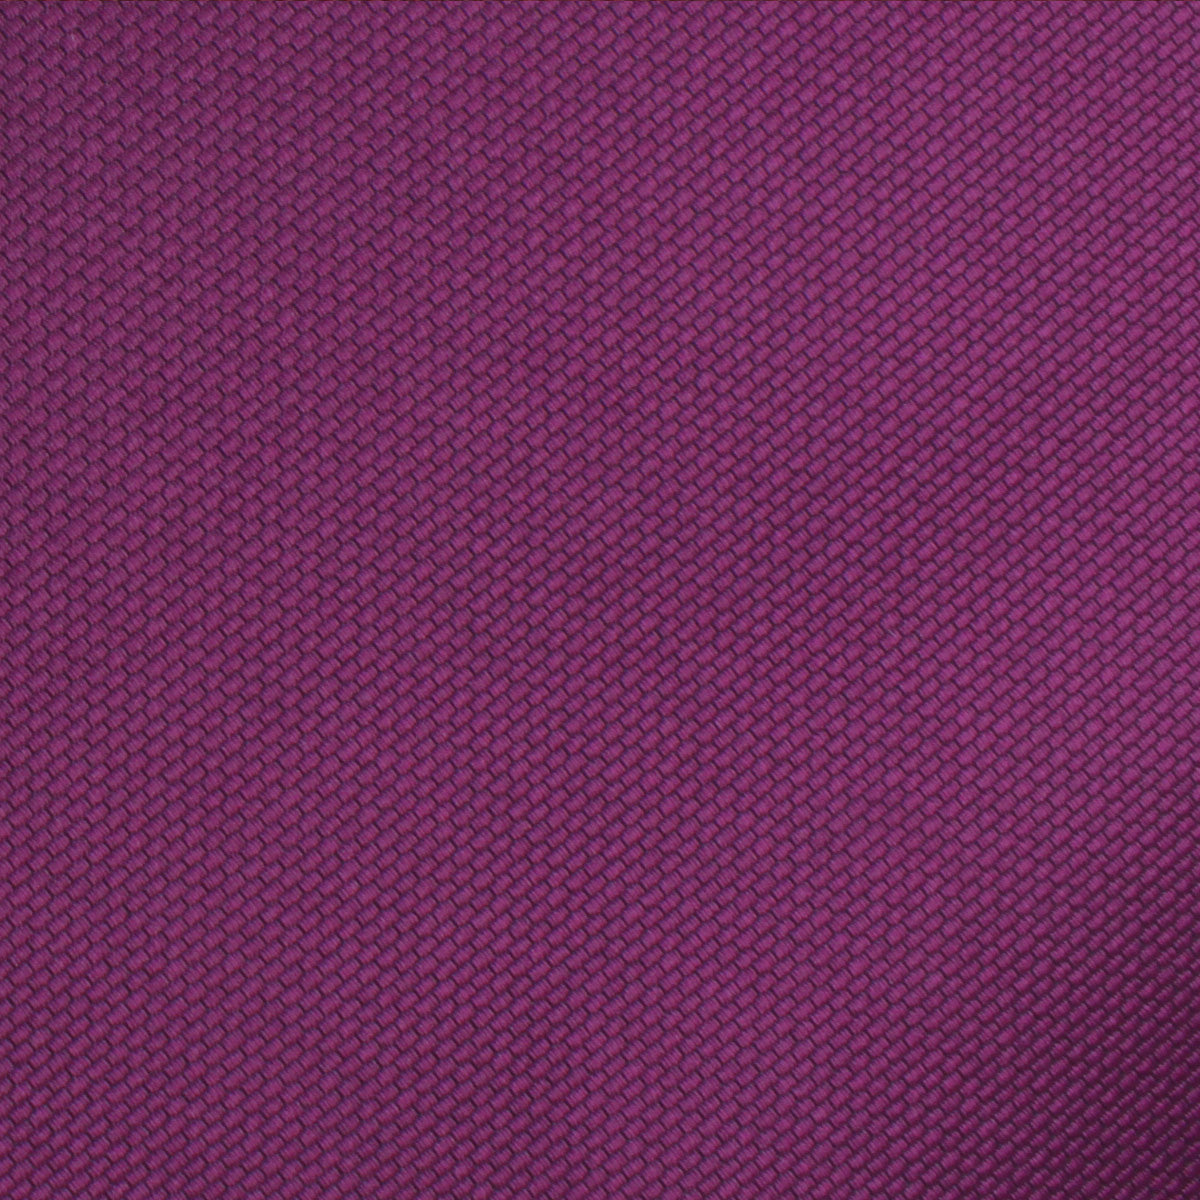 Sangria Purple Weave Bow Tie Fabric